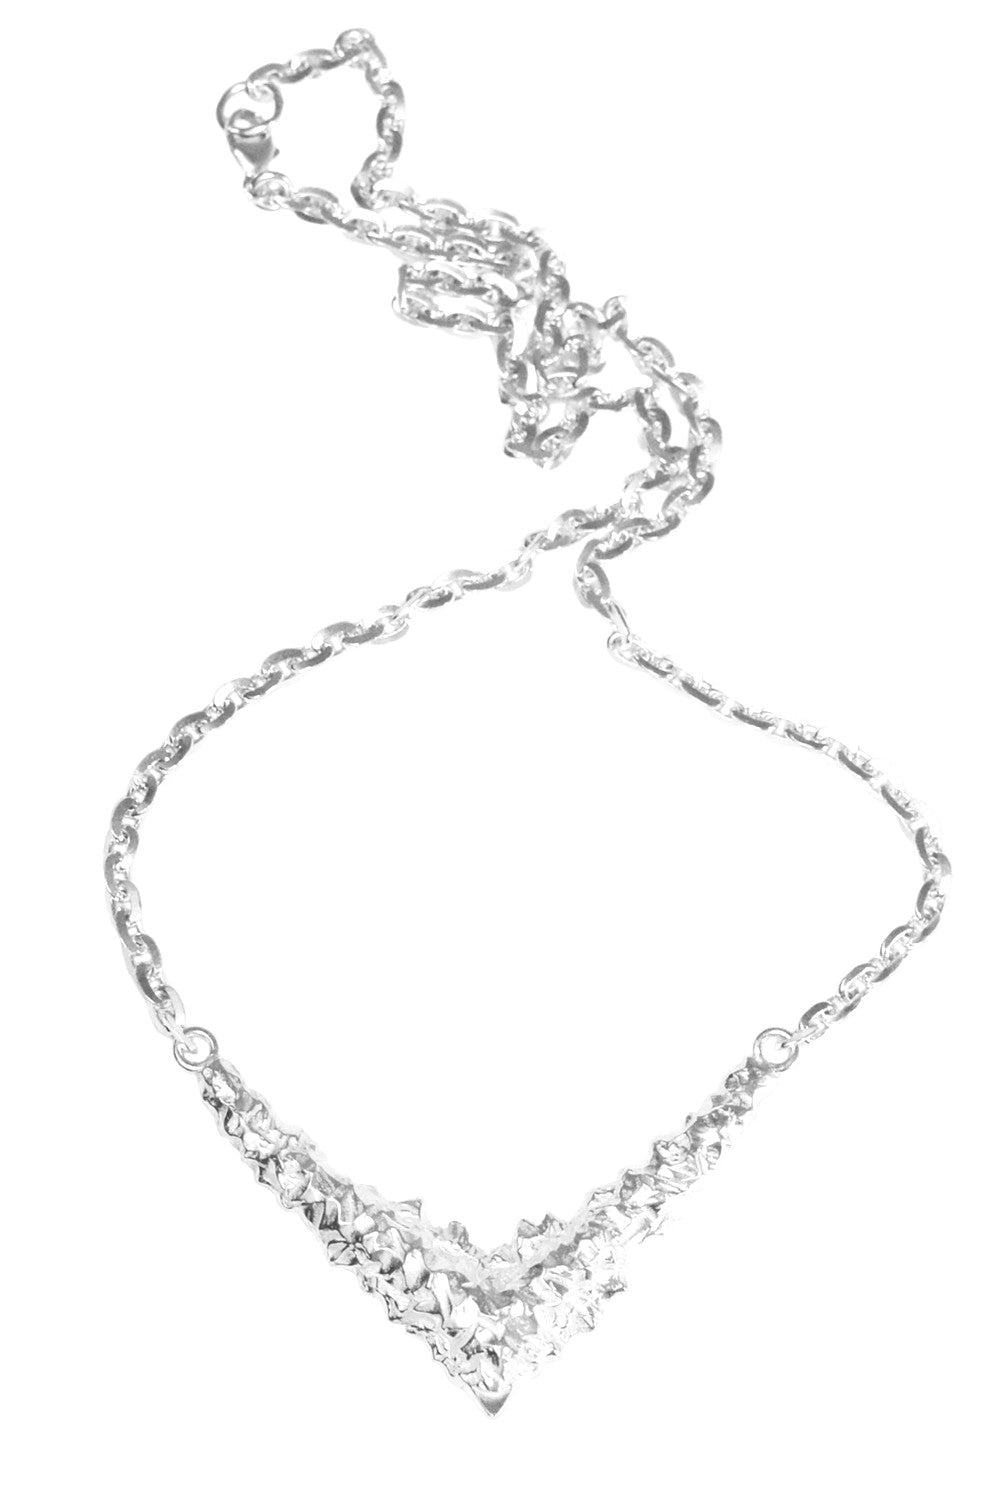 Vanadis necklace by Annika Burman